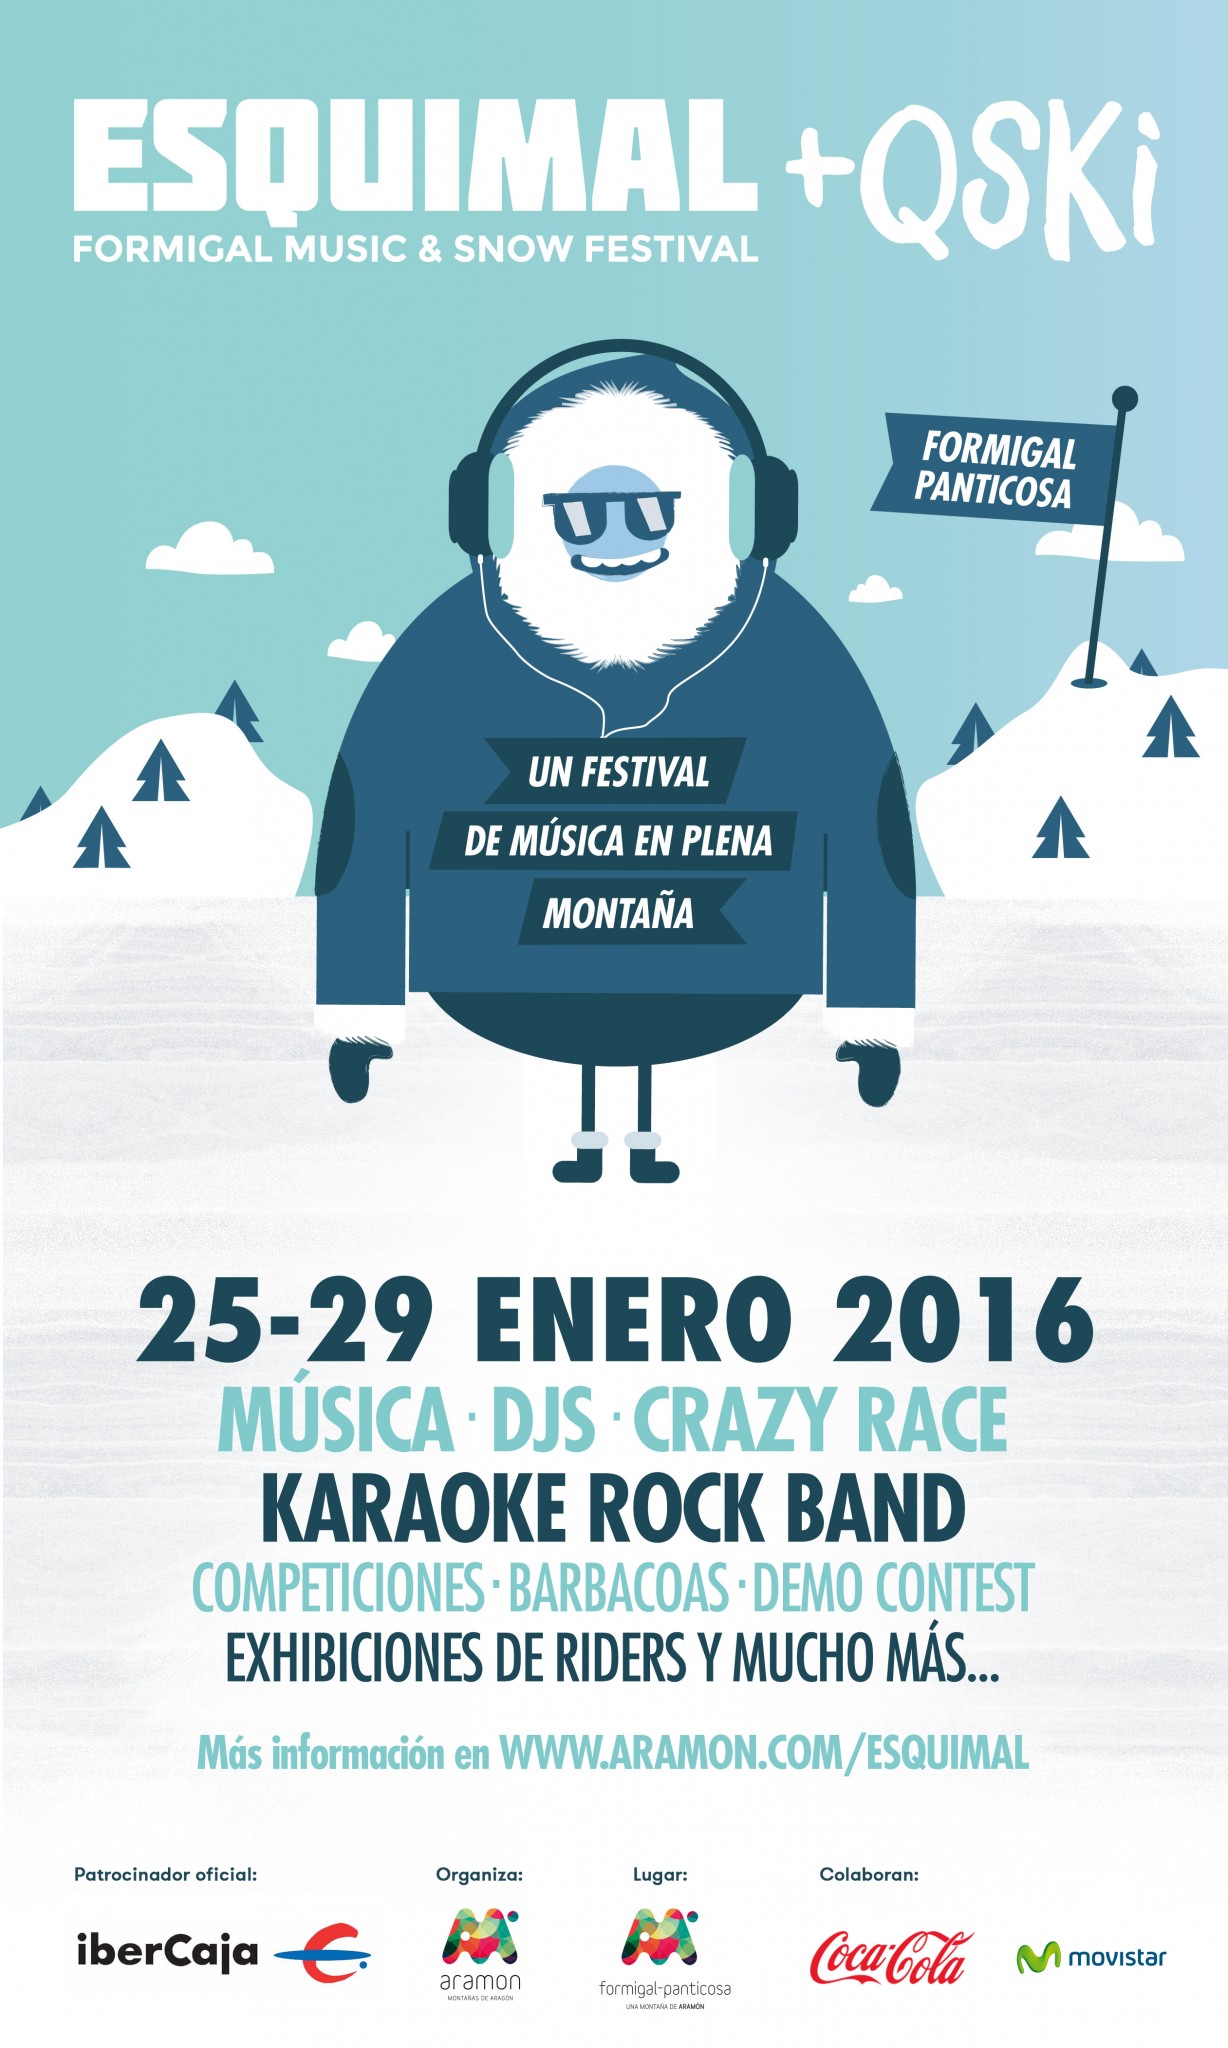 Formigal-Panticosa organiza el Festival Esquimal+Qski Music & Snow